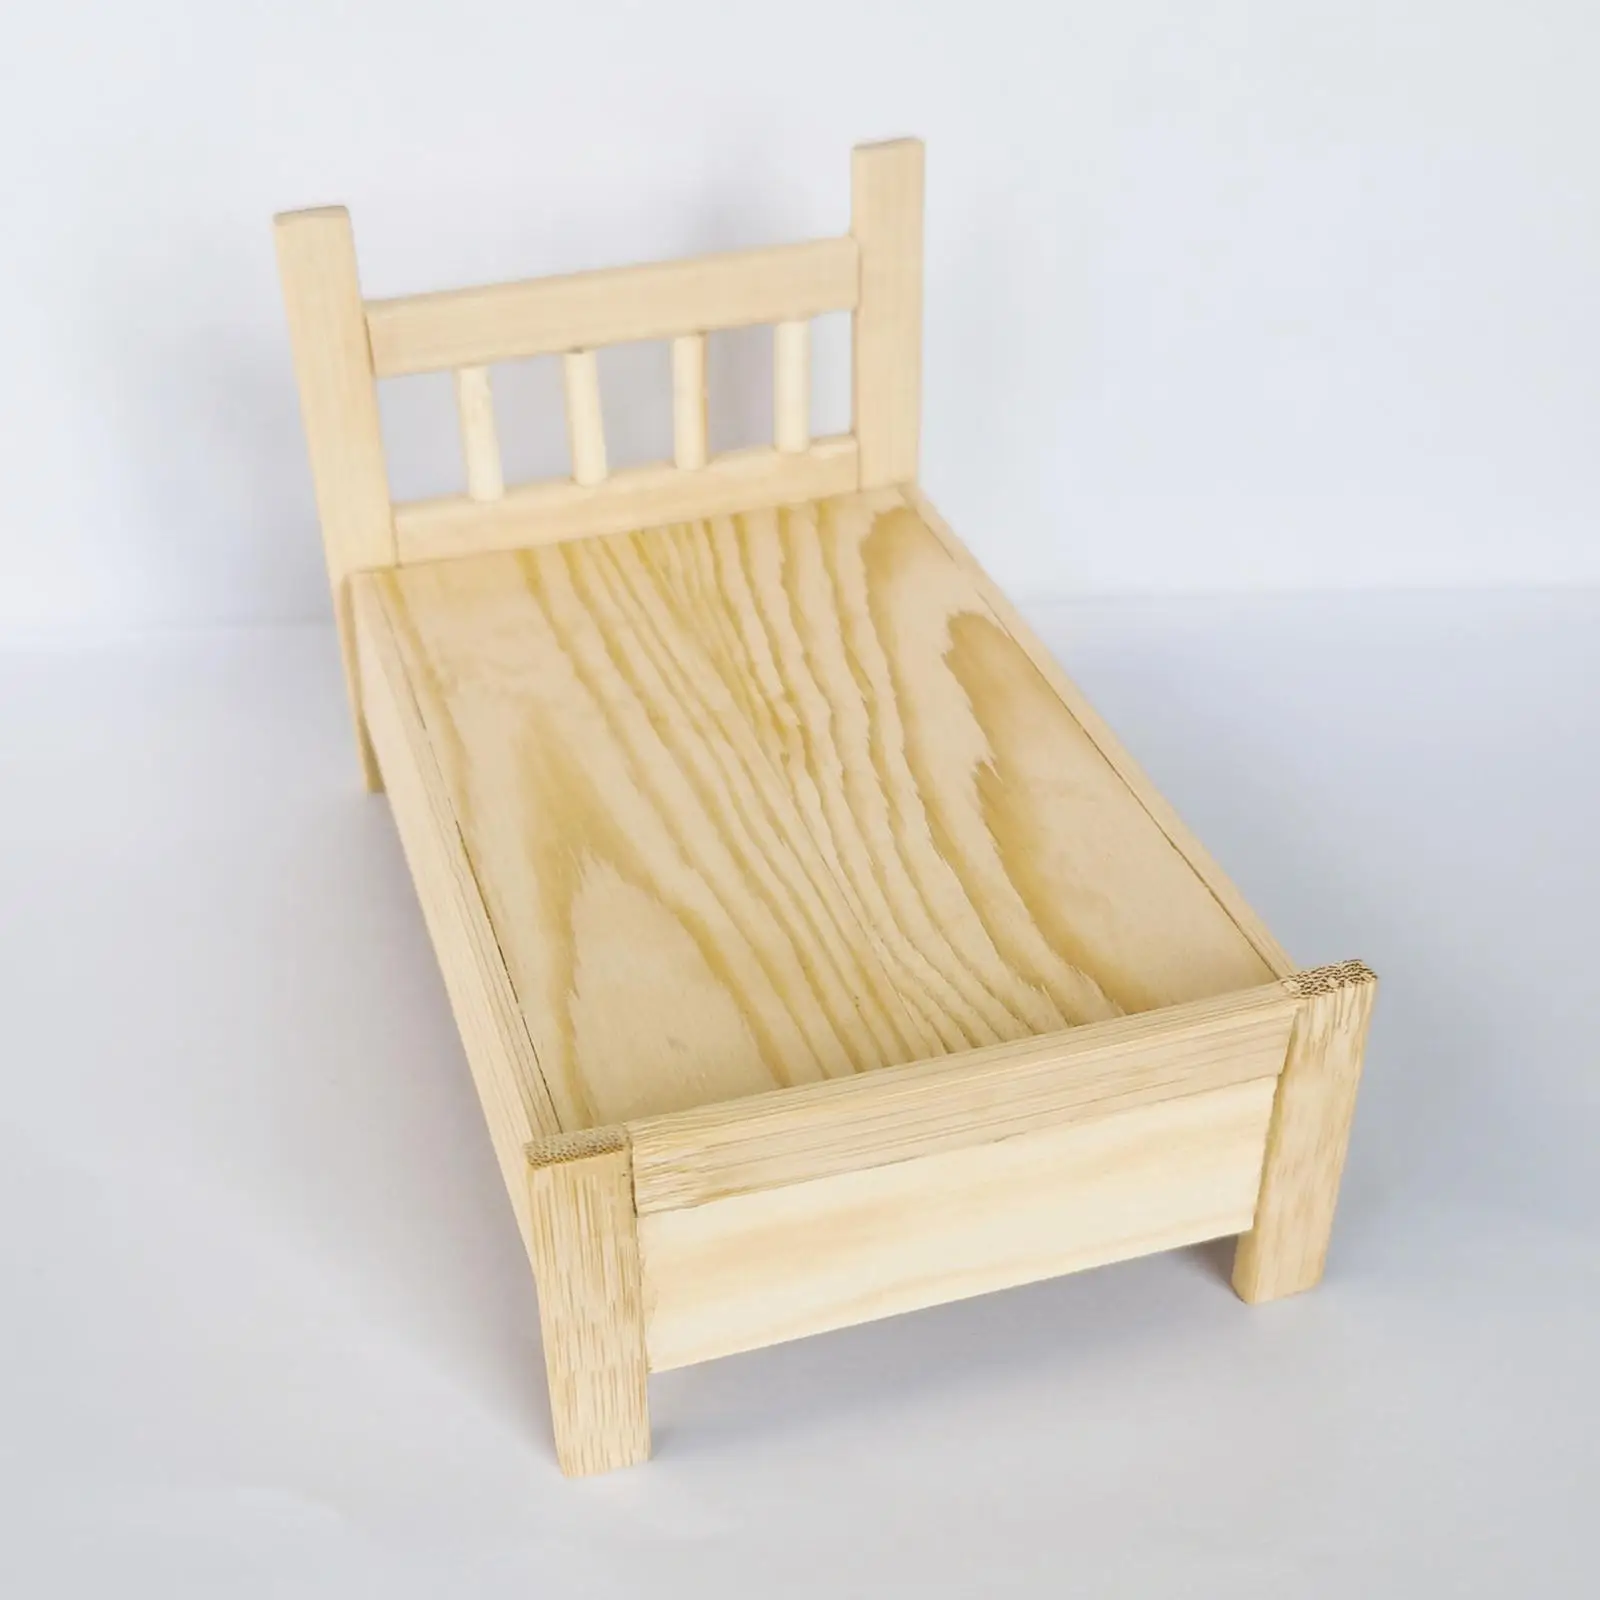 1/12 Scale Miniature Bed, Wooden Furniture Micro Landscape, Doll Accessories Decoration